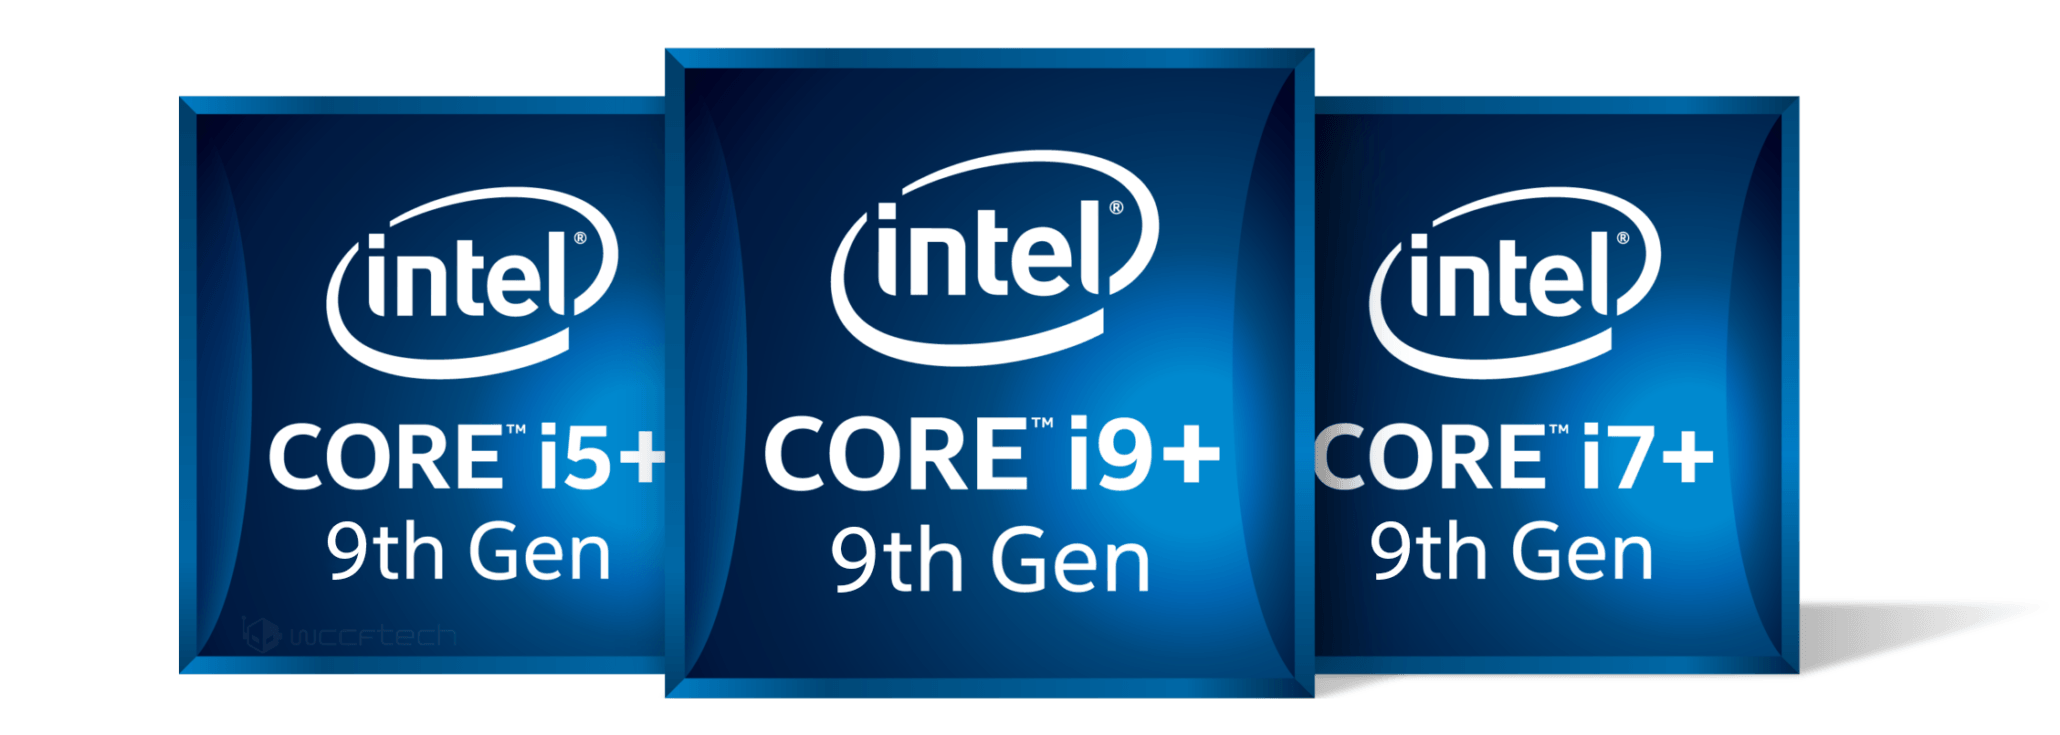 Intel I Processor Logo - Intel Ditching Hyper-Threading With New Core i7-9700K Coffee Lake ...